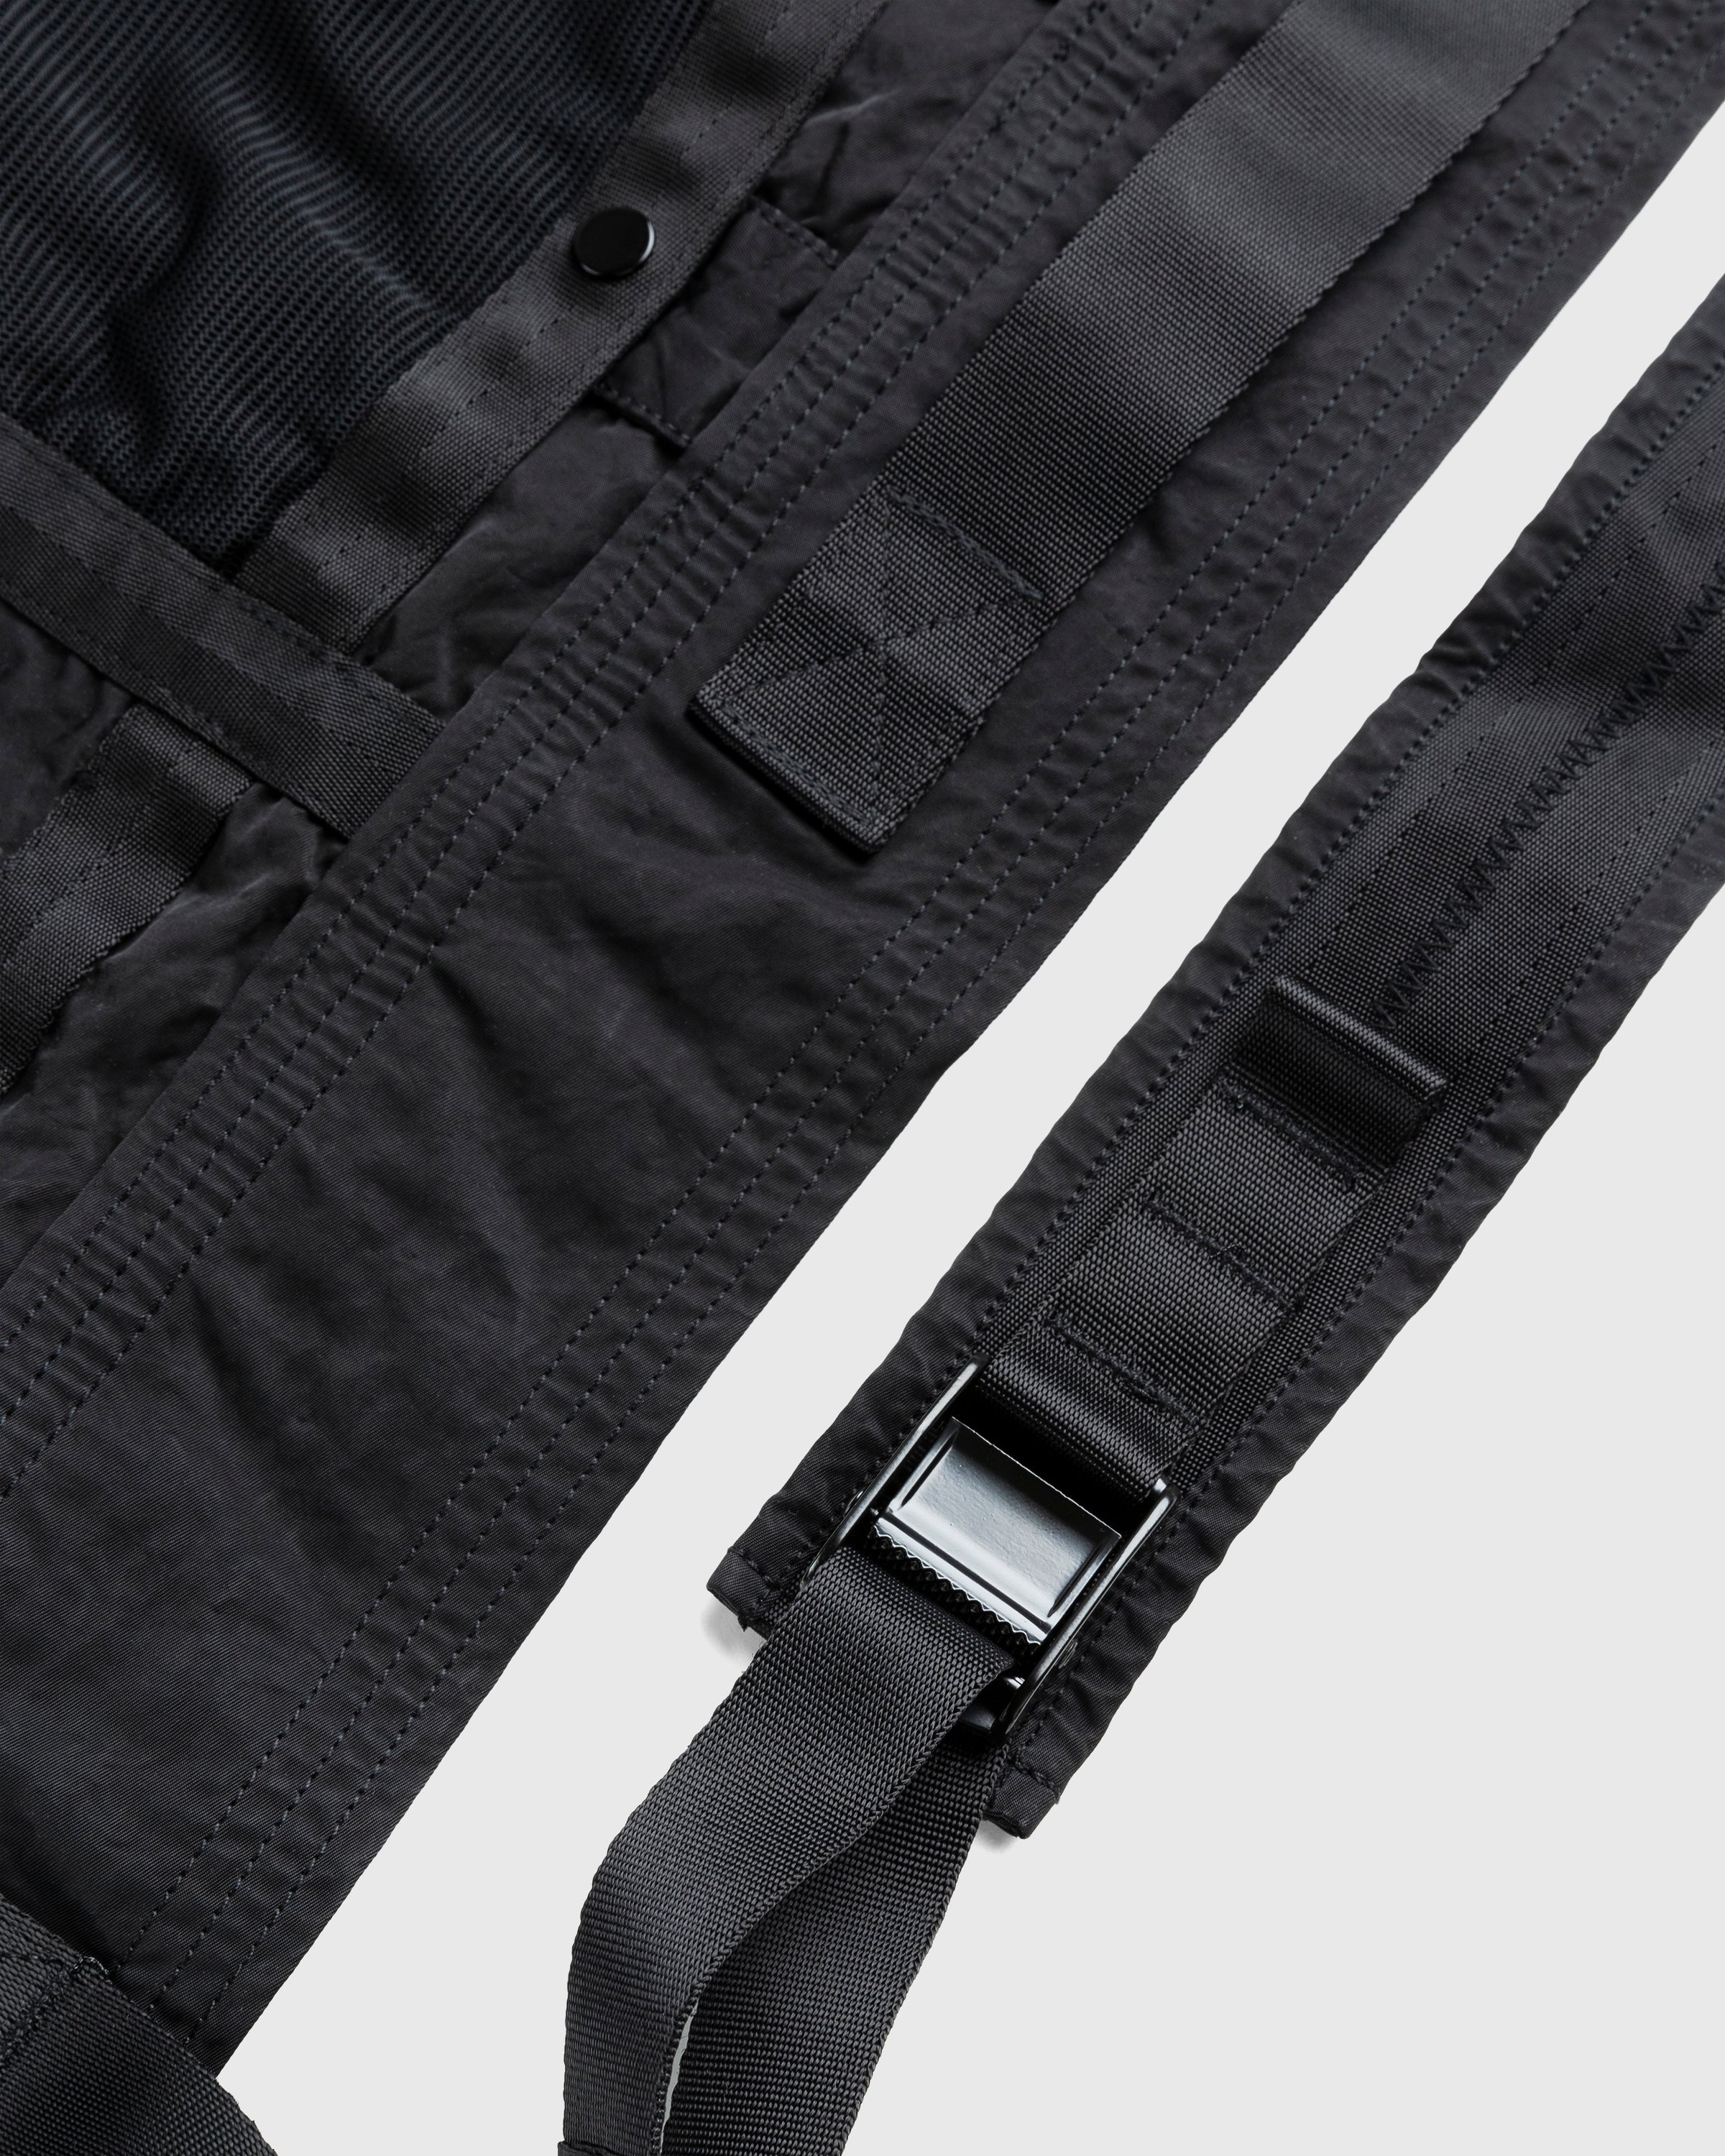 C.P. Company – Nylon B Messenger Bag Black - Pouches - Black - Image 4